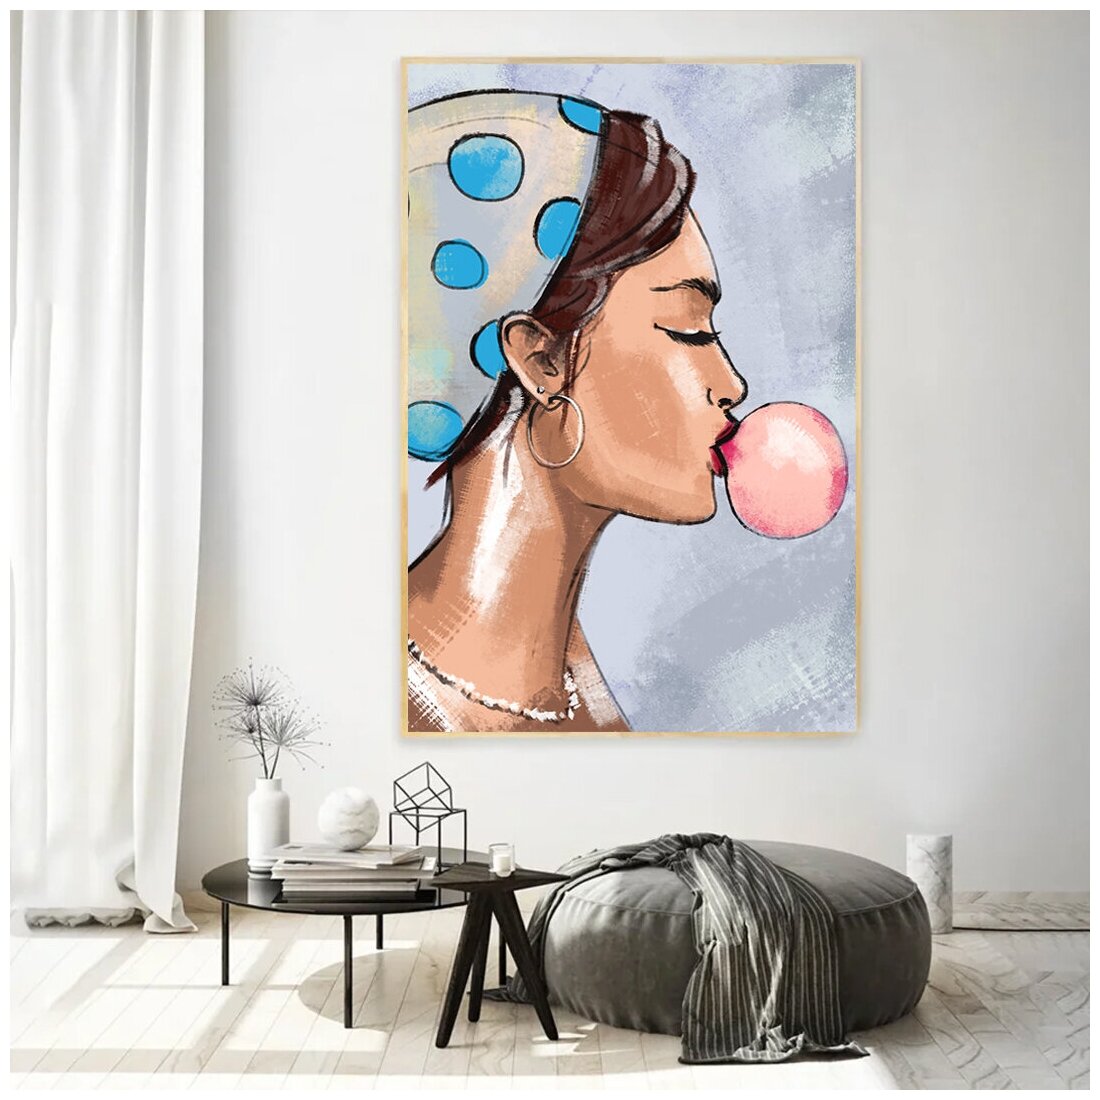 Картина интерьерная на холсте Art. home24 Девушка с жвачкой, 100 x 150